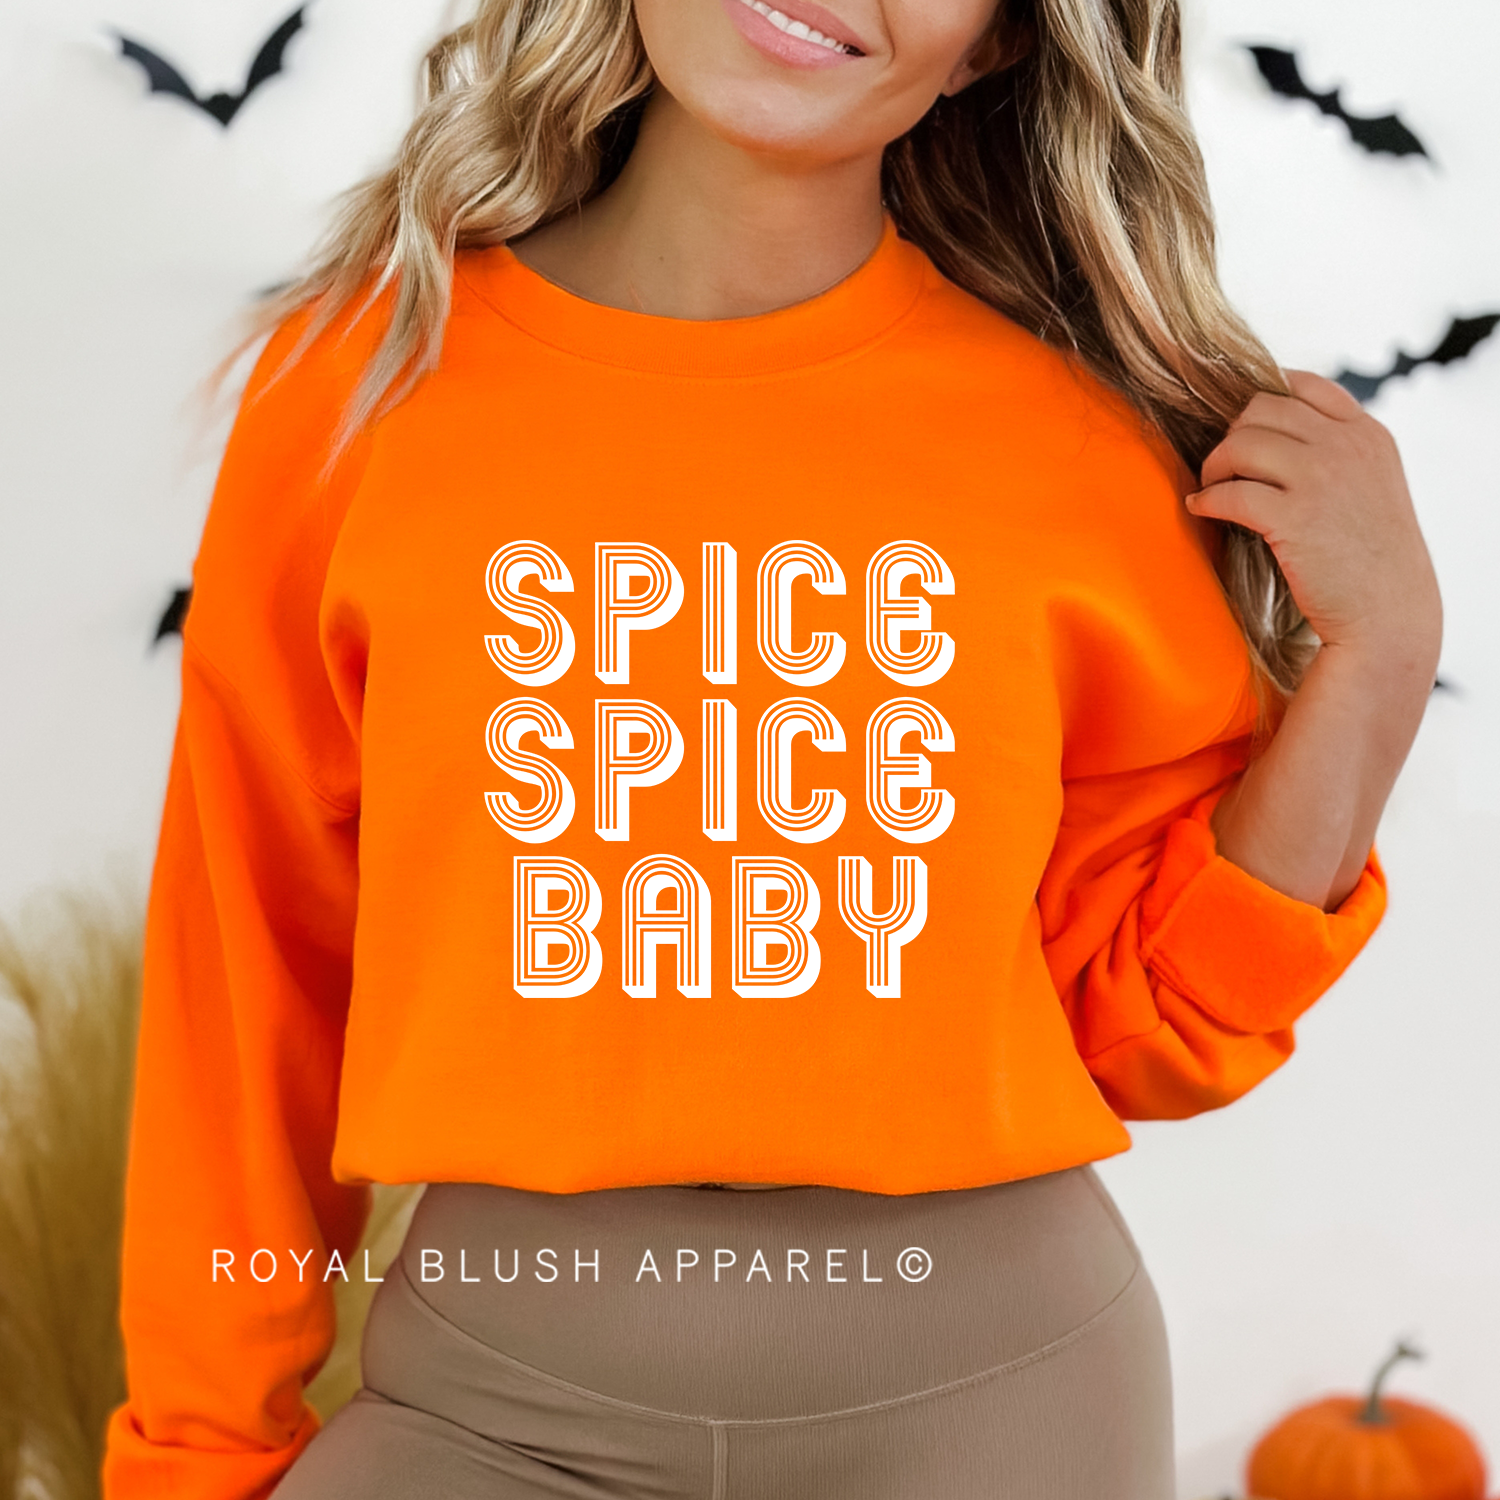 Spice Spice Baby - MEDIUM ORANGE CREW